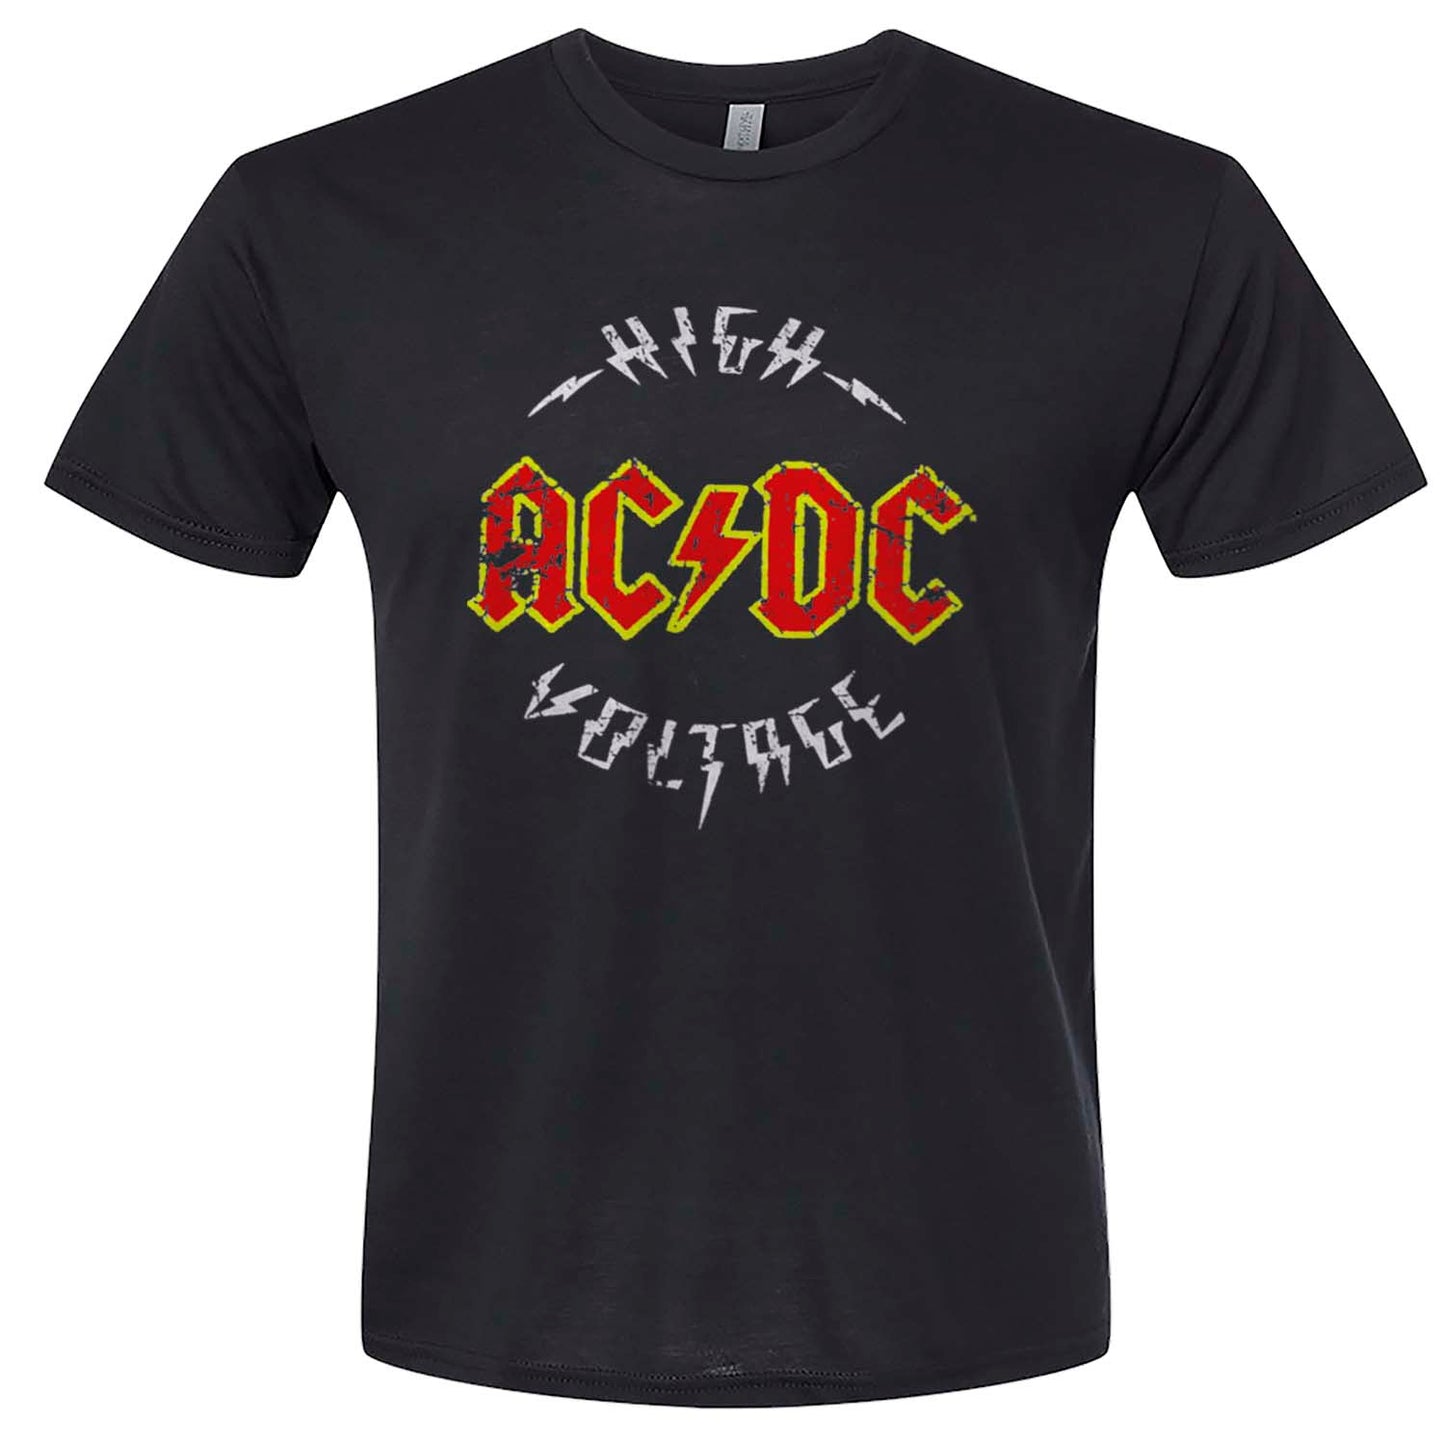 ac dc rock band logo Tee shirt adult unisex